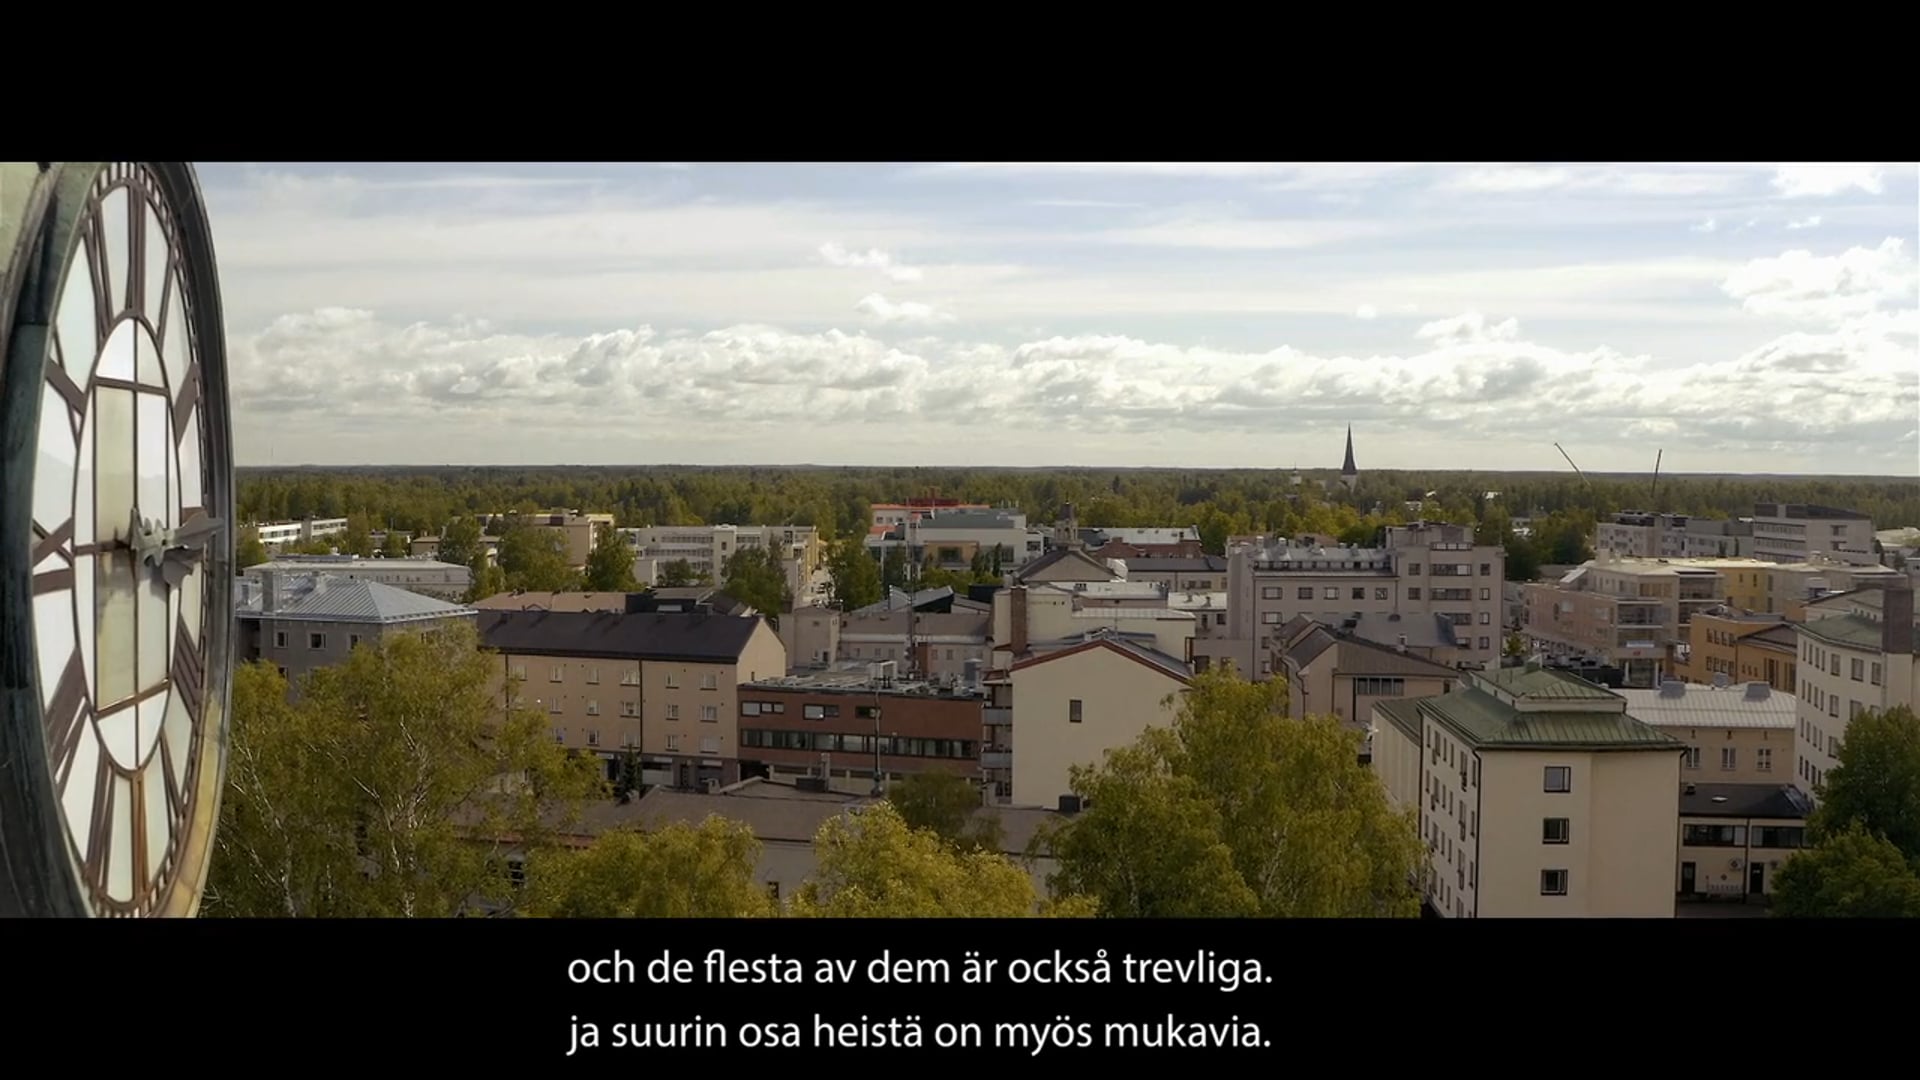 Marketing video for The Jakobstad Region!